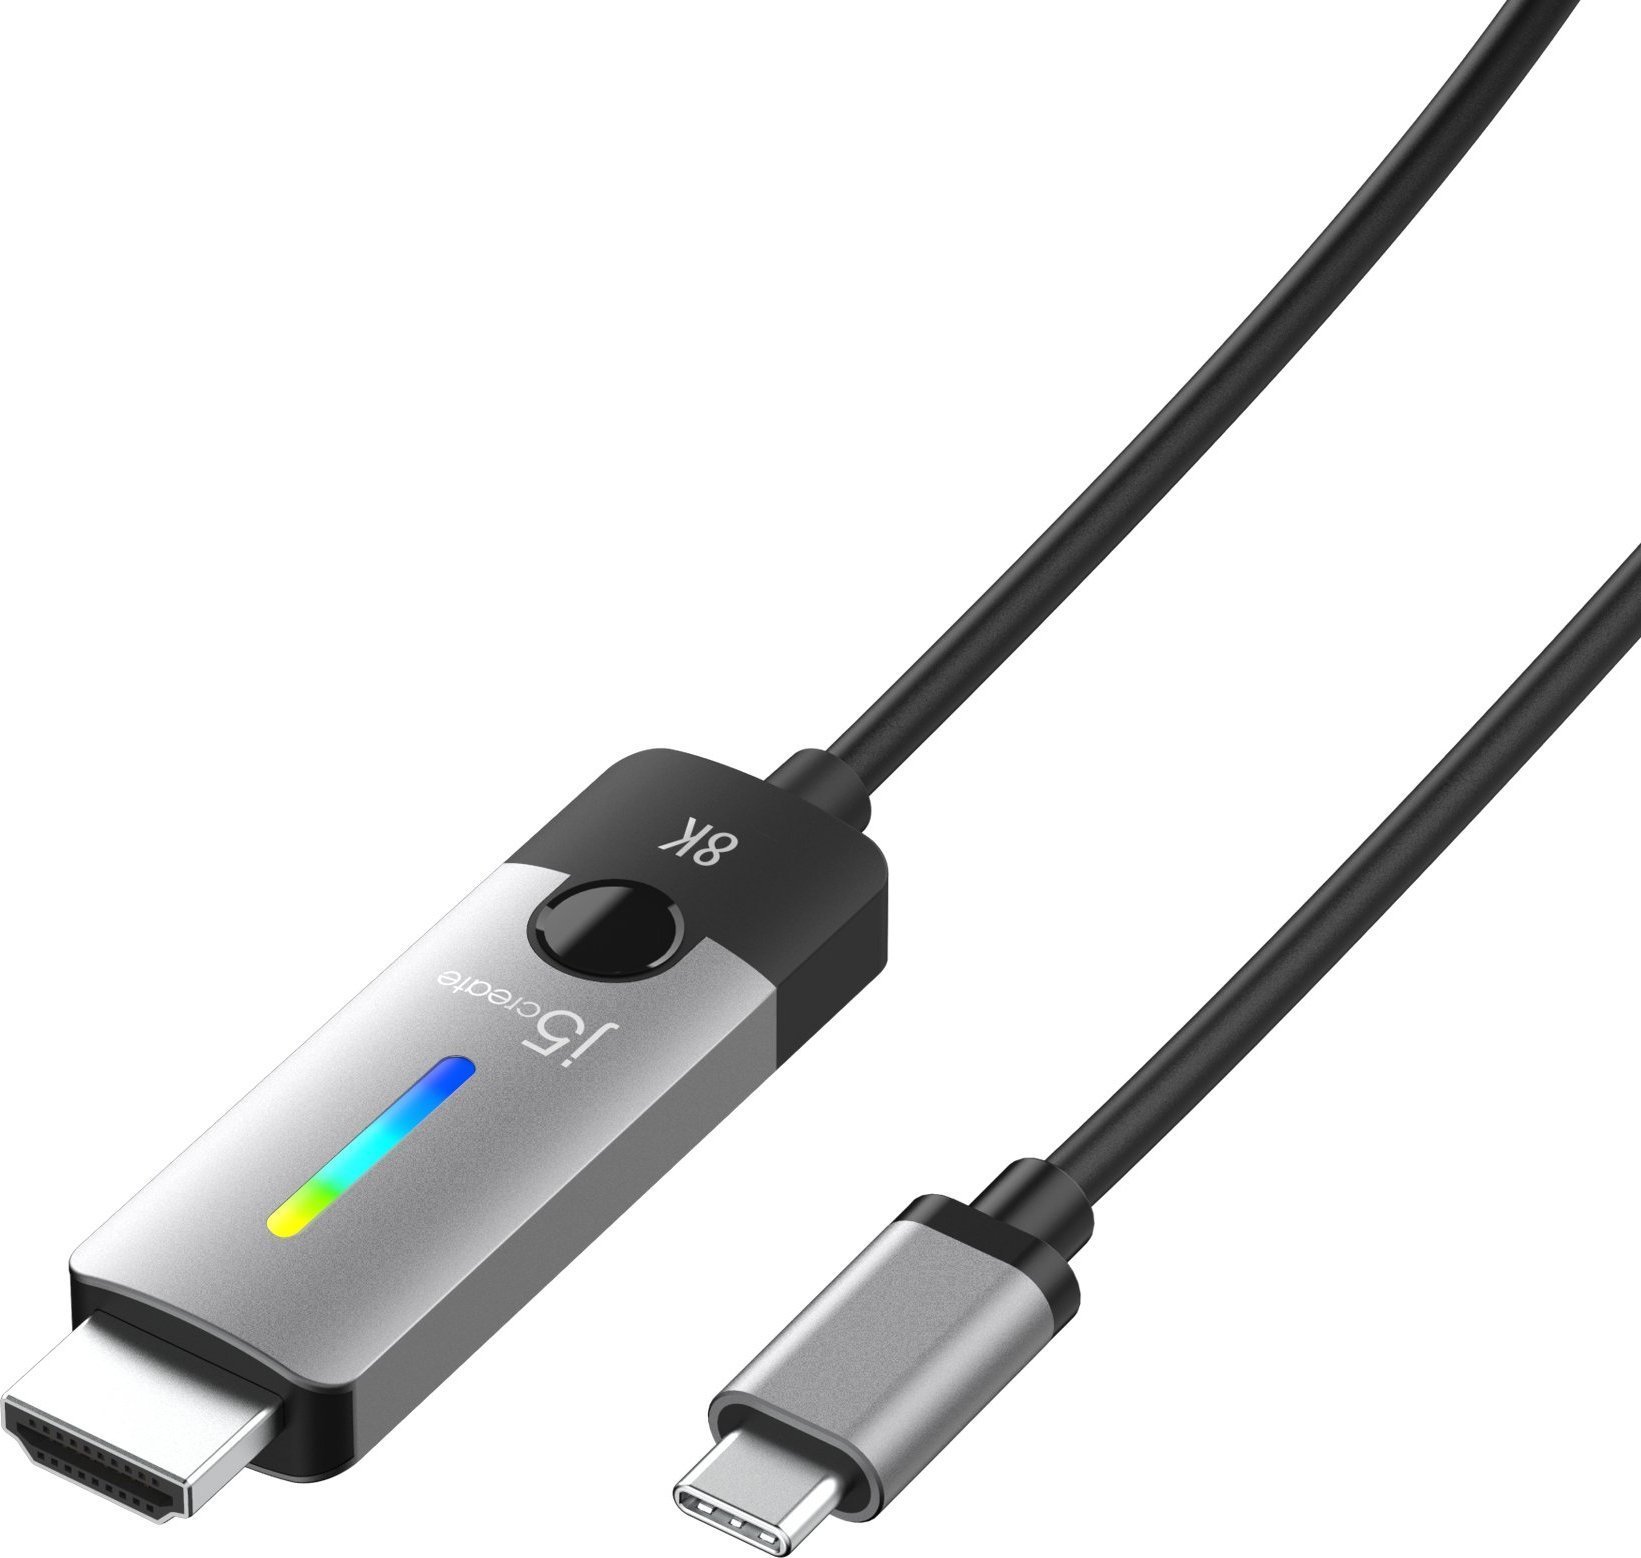 Adaptor USB j5create j5create JCC157 1,79 m USB Type-C HDMI Negru, Gri